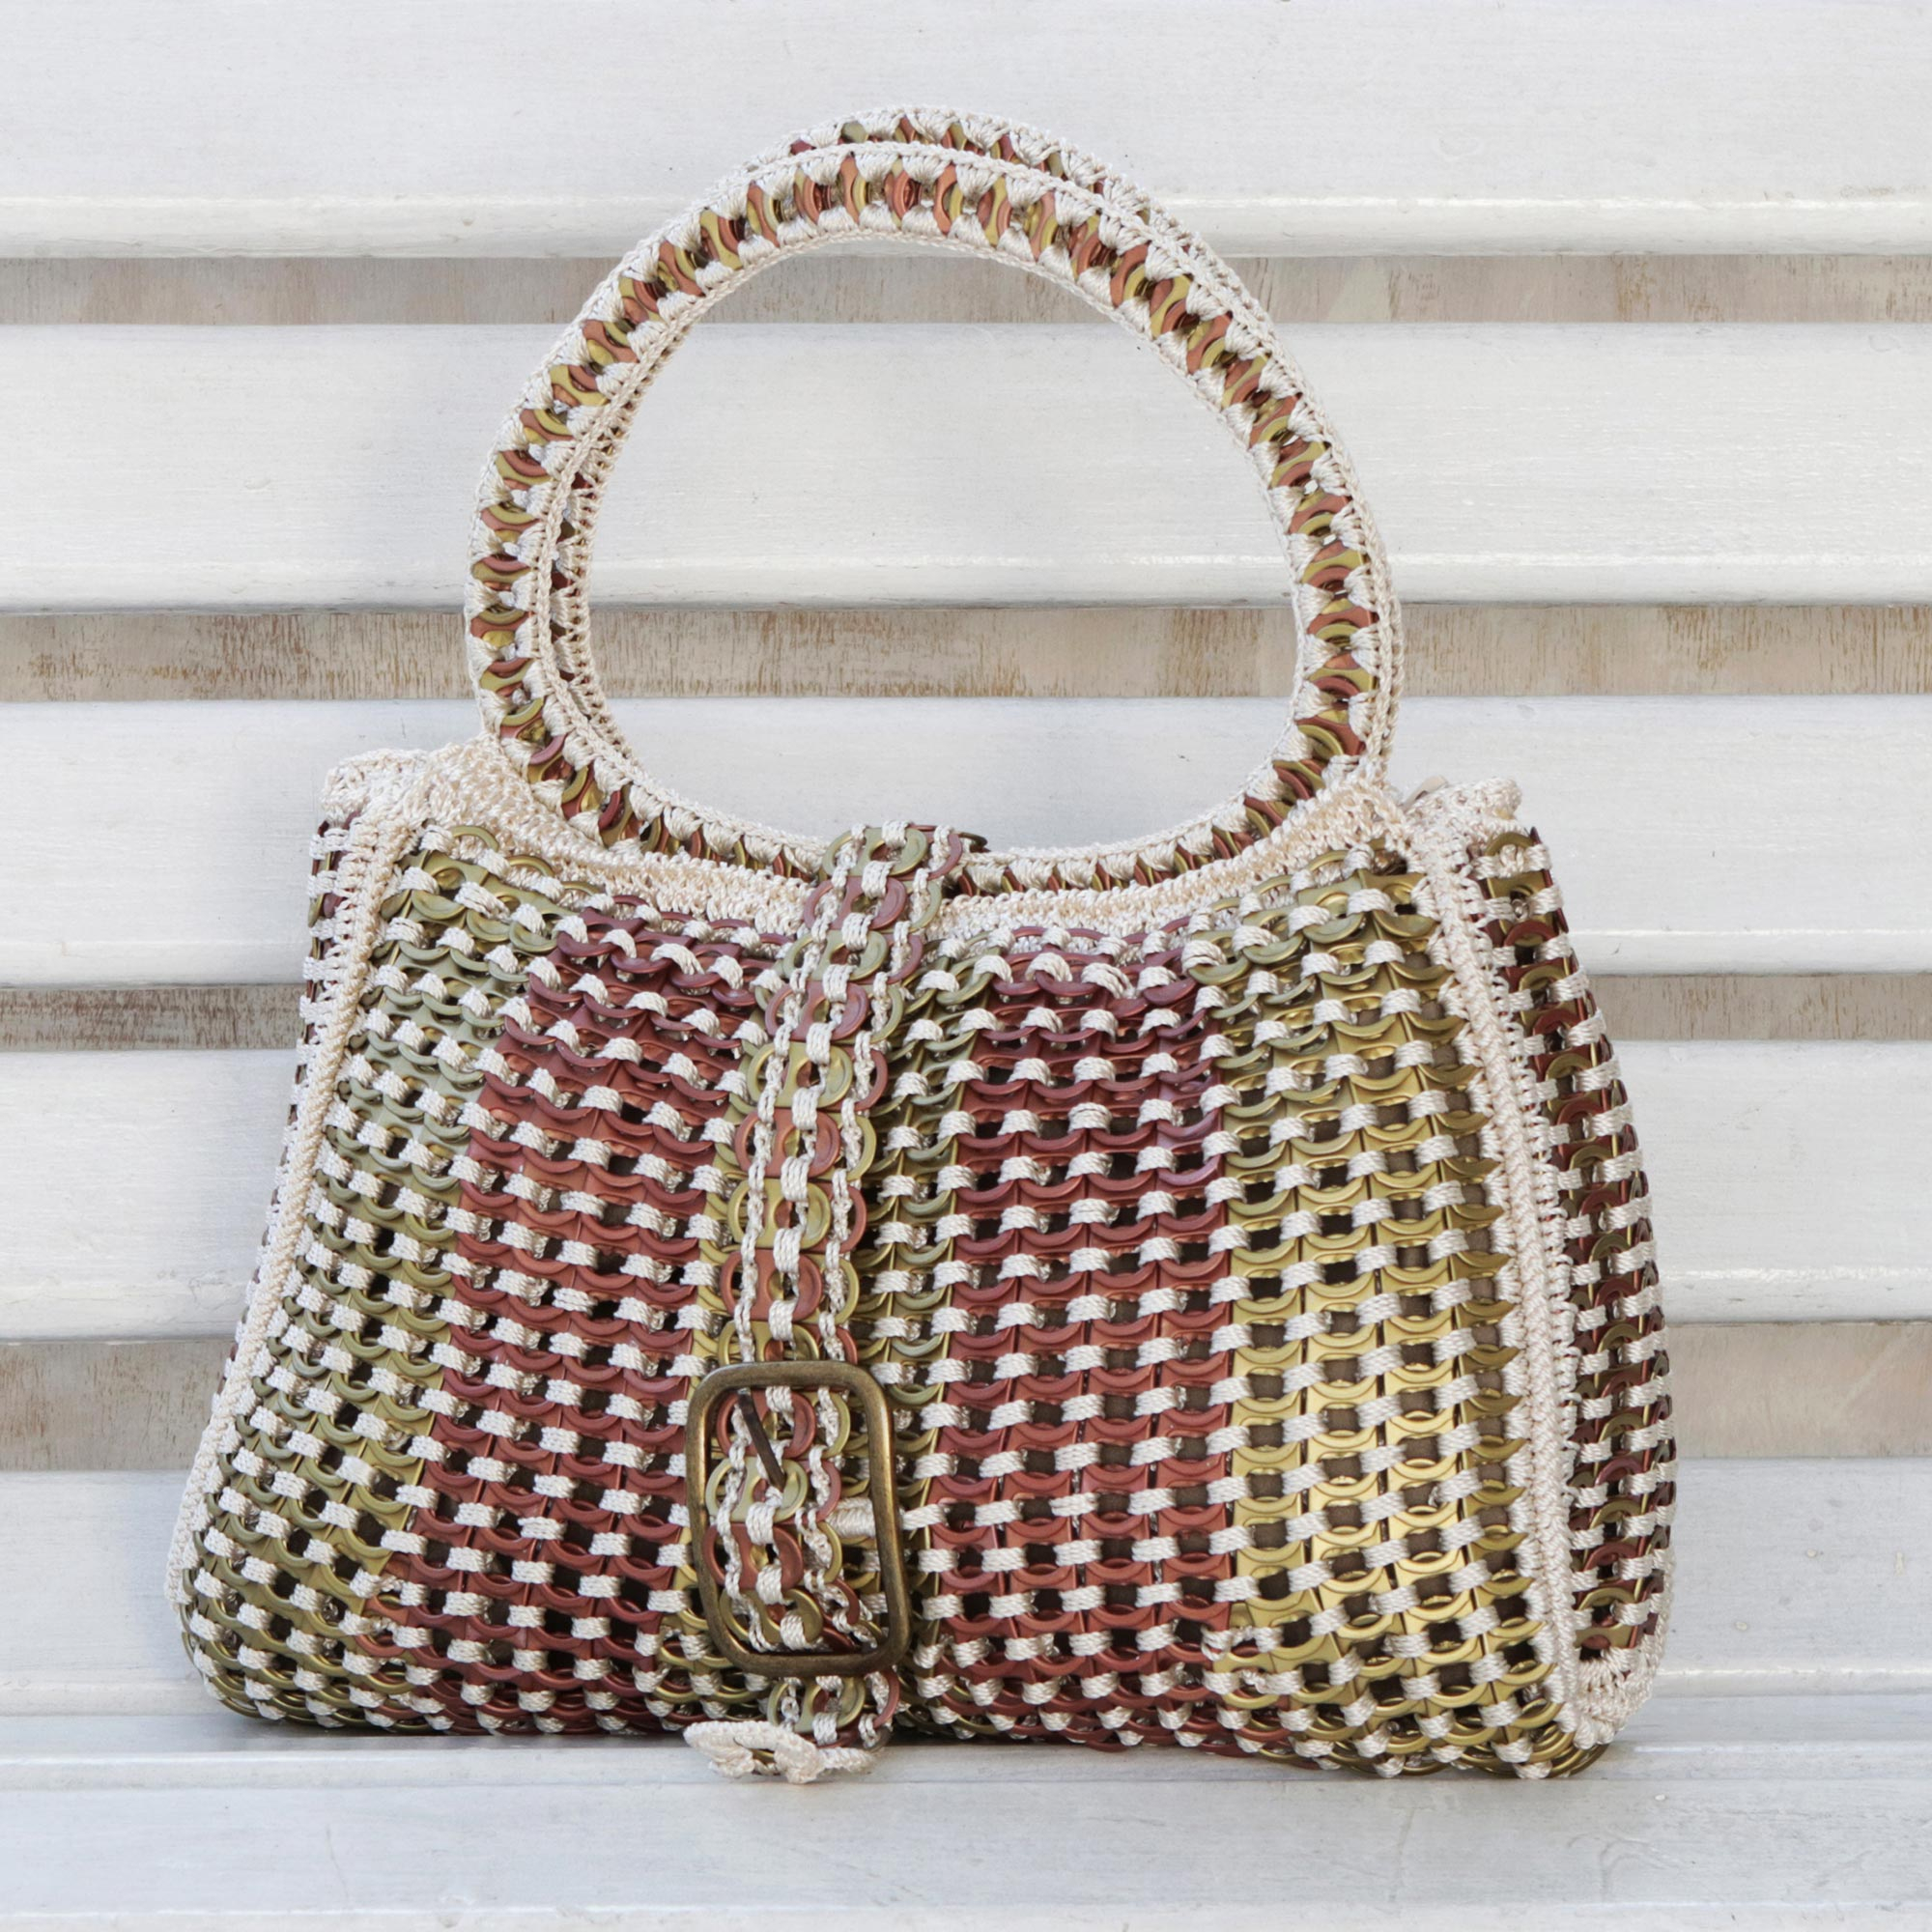 Handmade crochet fuchsia handbag with wooden handle